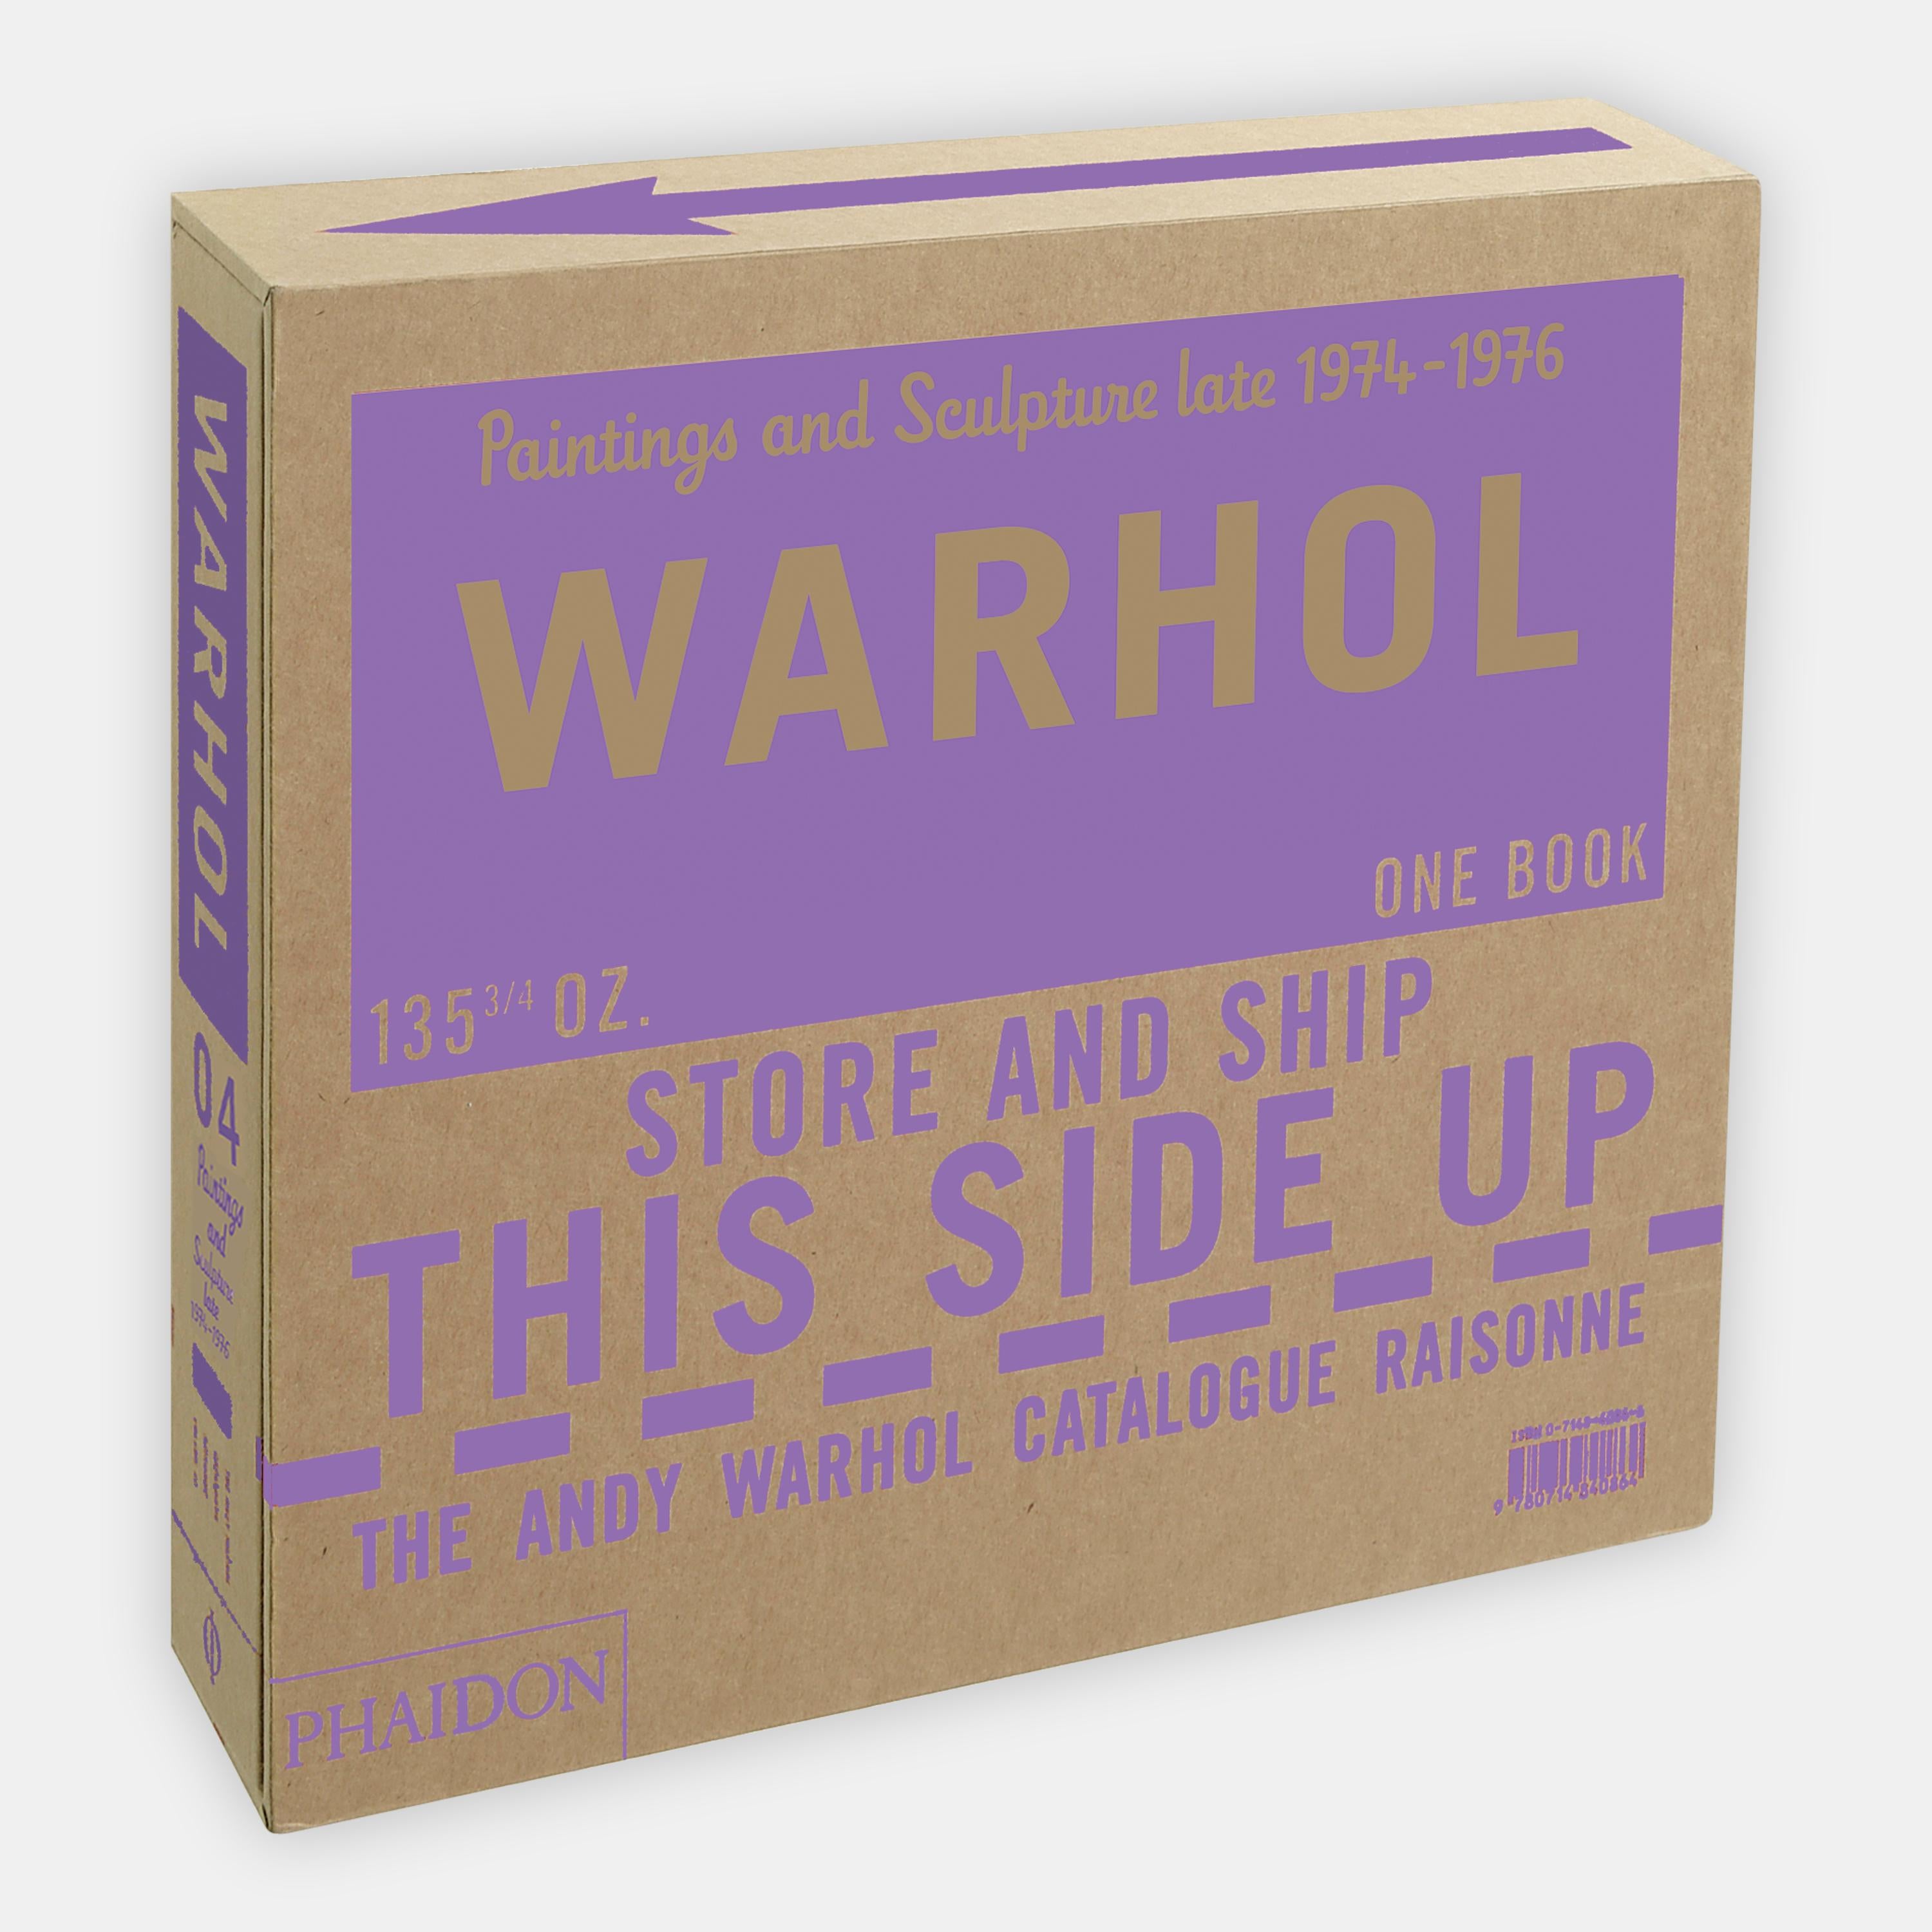 European The Andy Warhol Catalogue Raisonné, Paintings and Sculpture, 1974-1976 Volume 4 For Sale